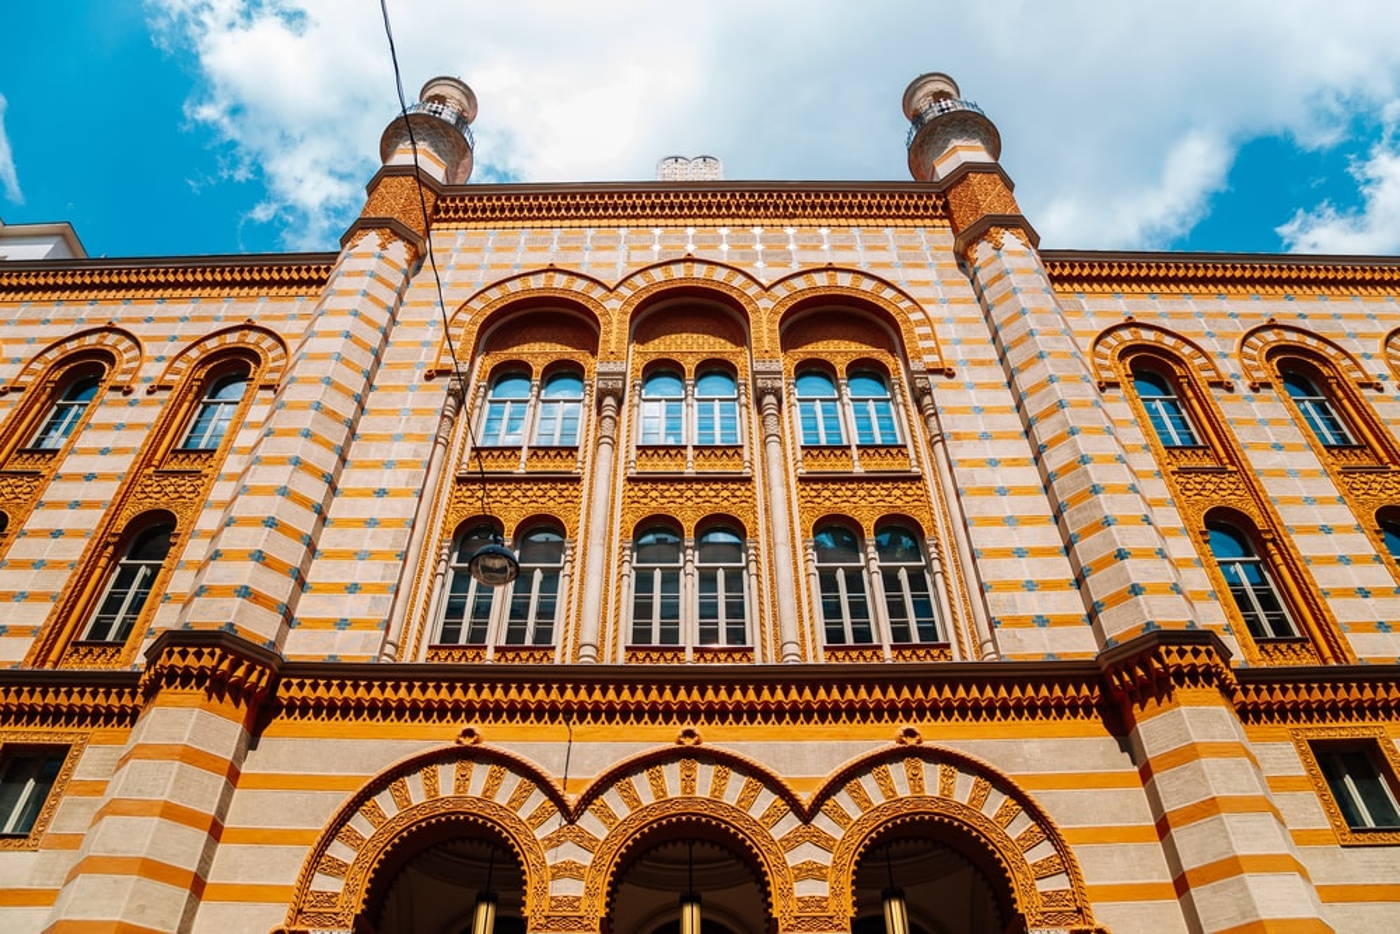 Rumbach street Synagogue à Budapest: excursions et billets